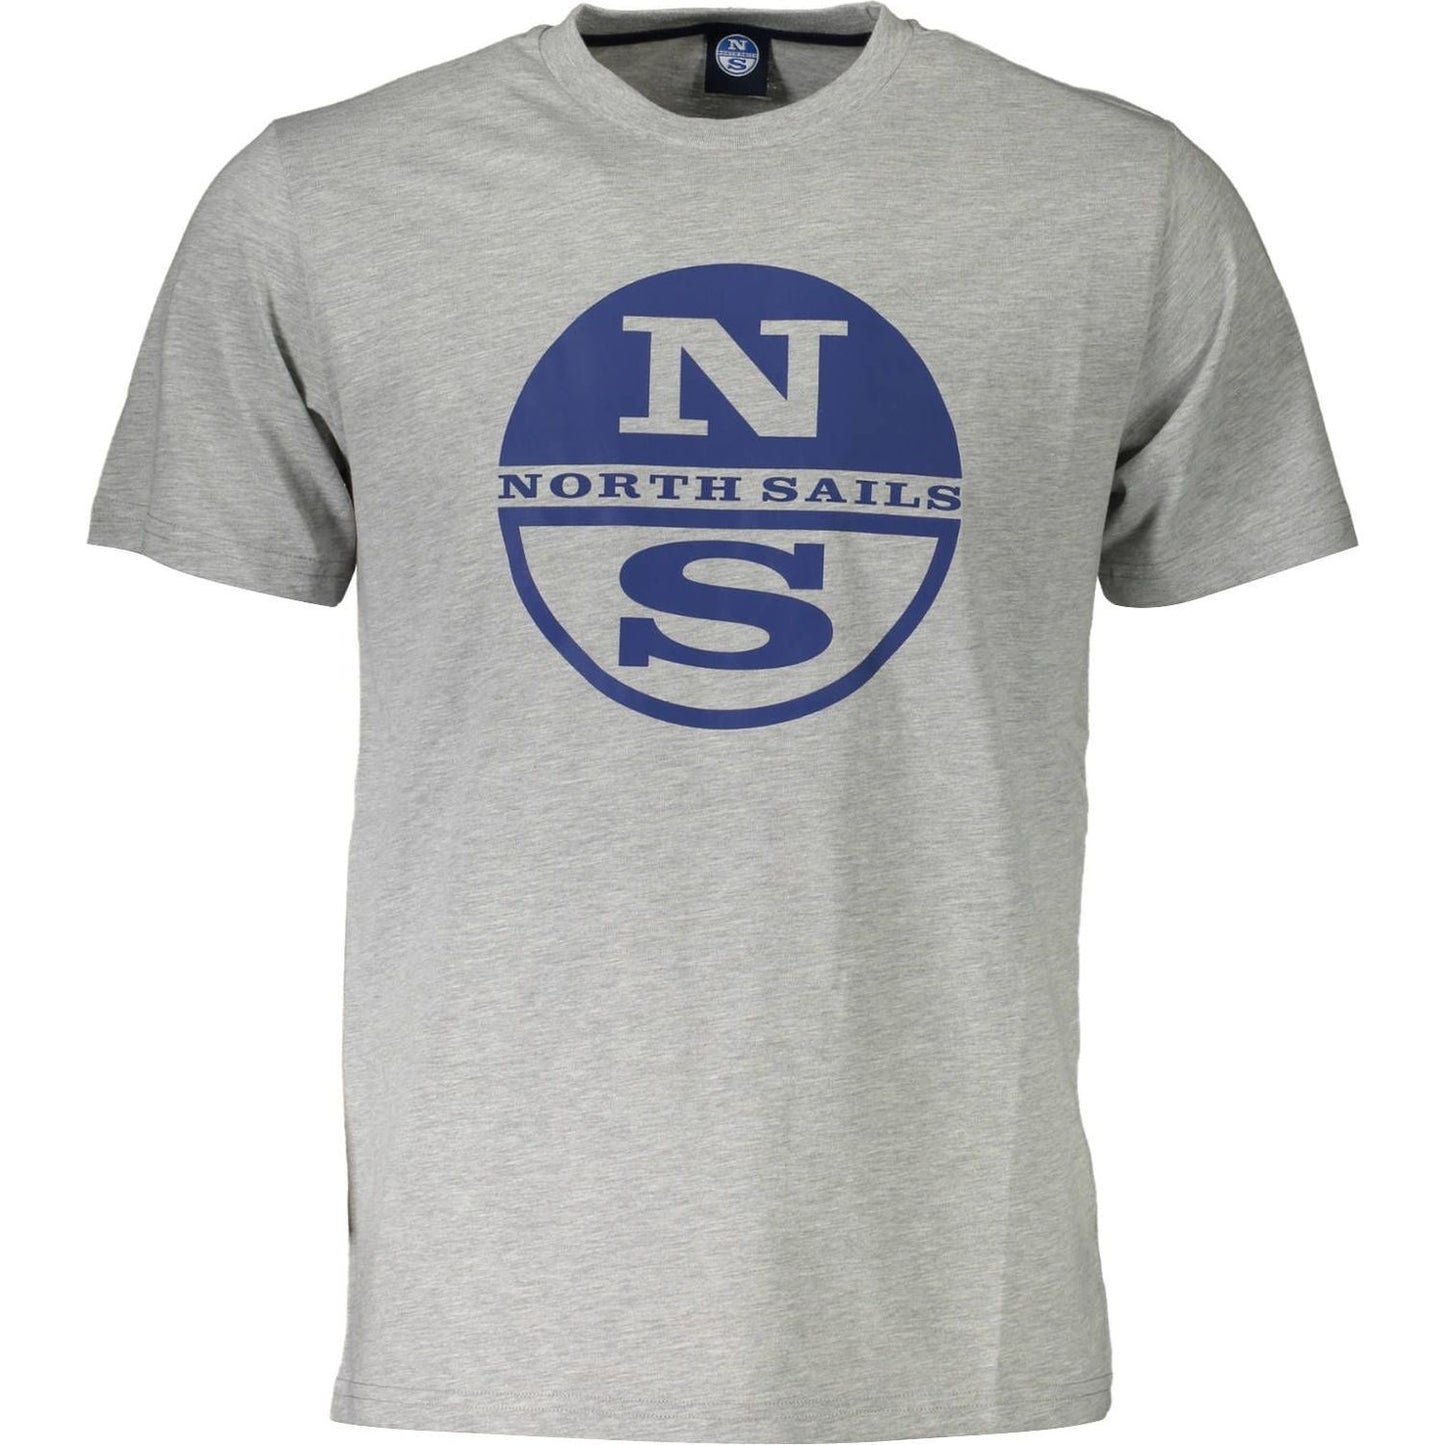 North Sails Sleek Gray Cotton T-Shirt with Iconic Print sleek-gray-cotton-t-shirt-with-iconic-print